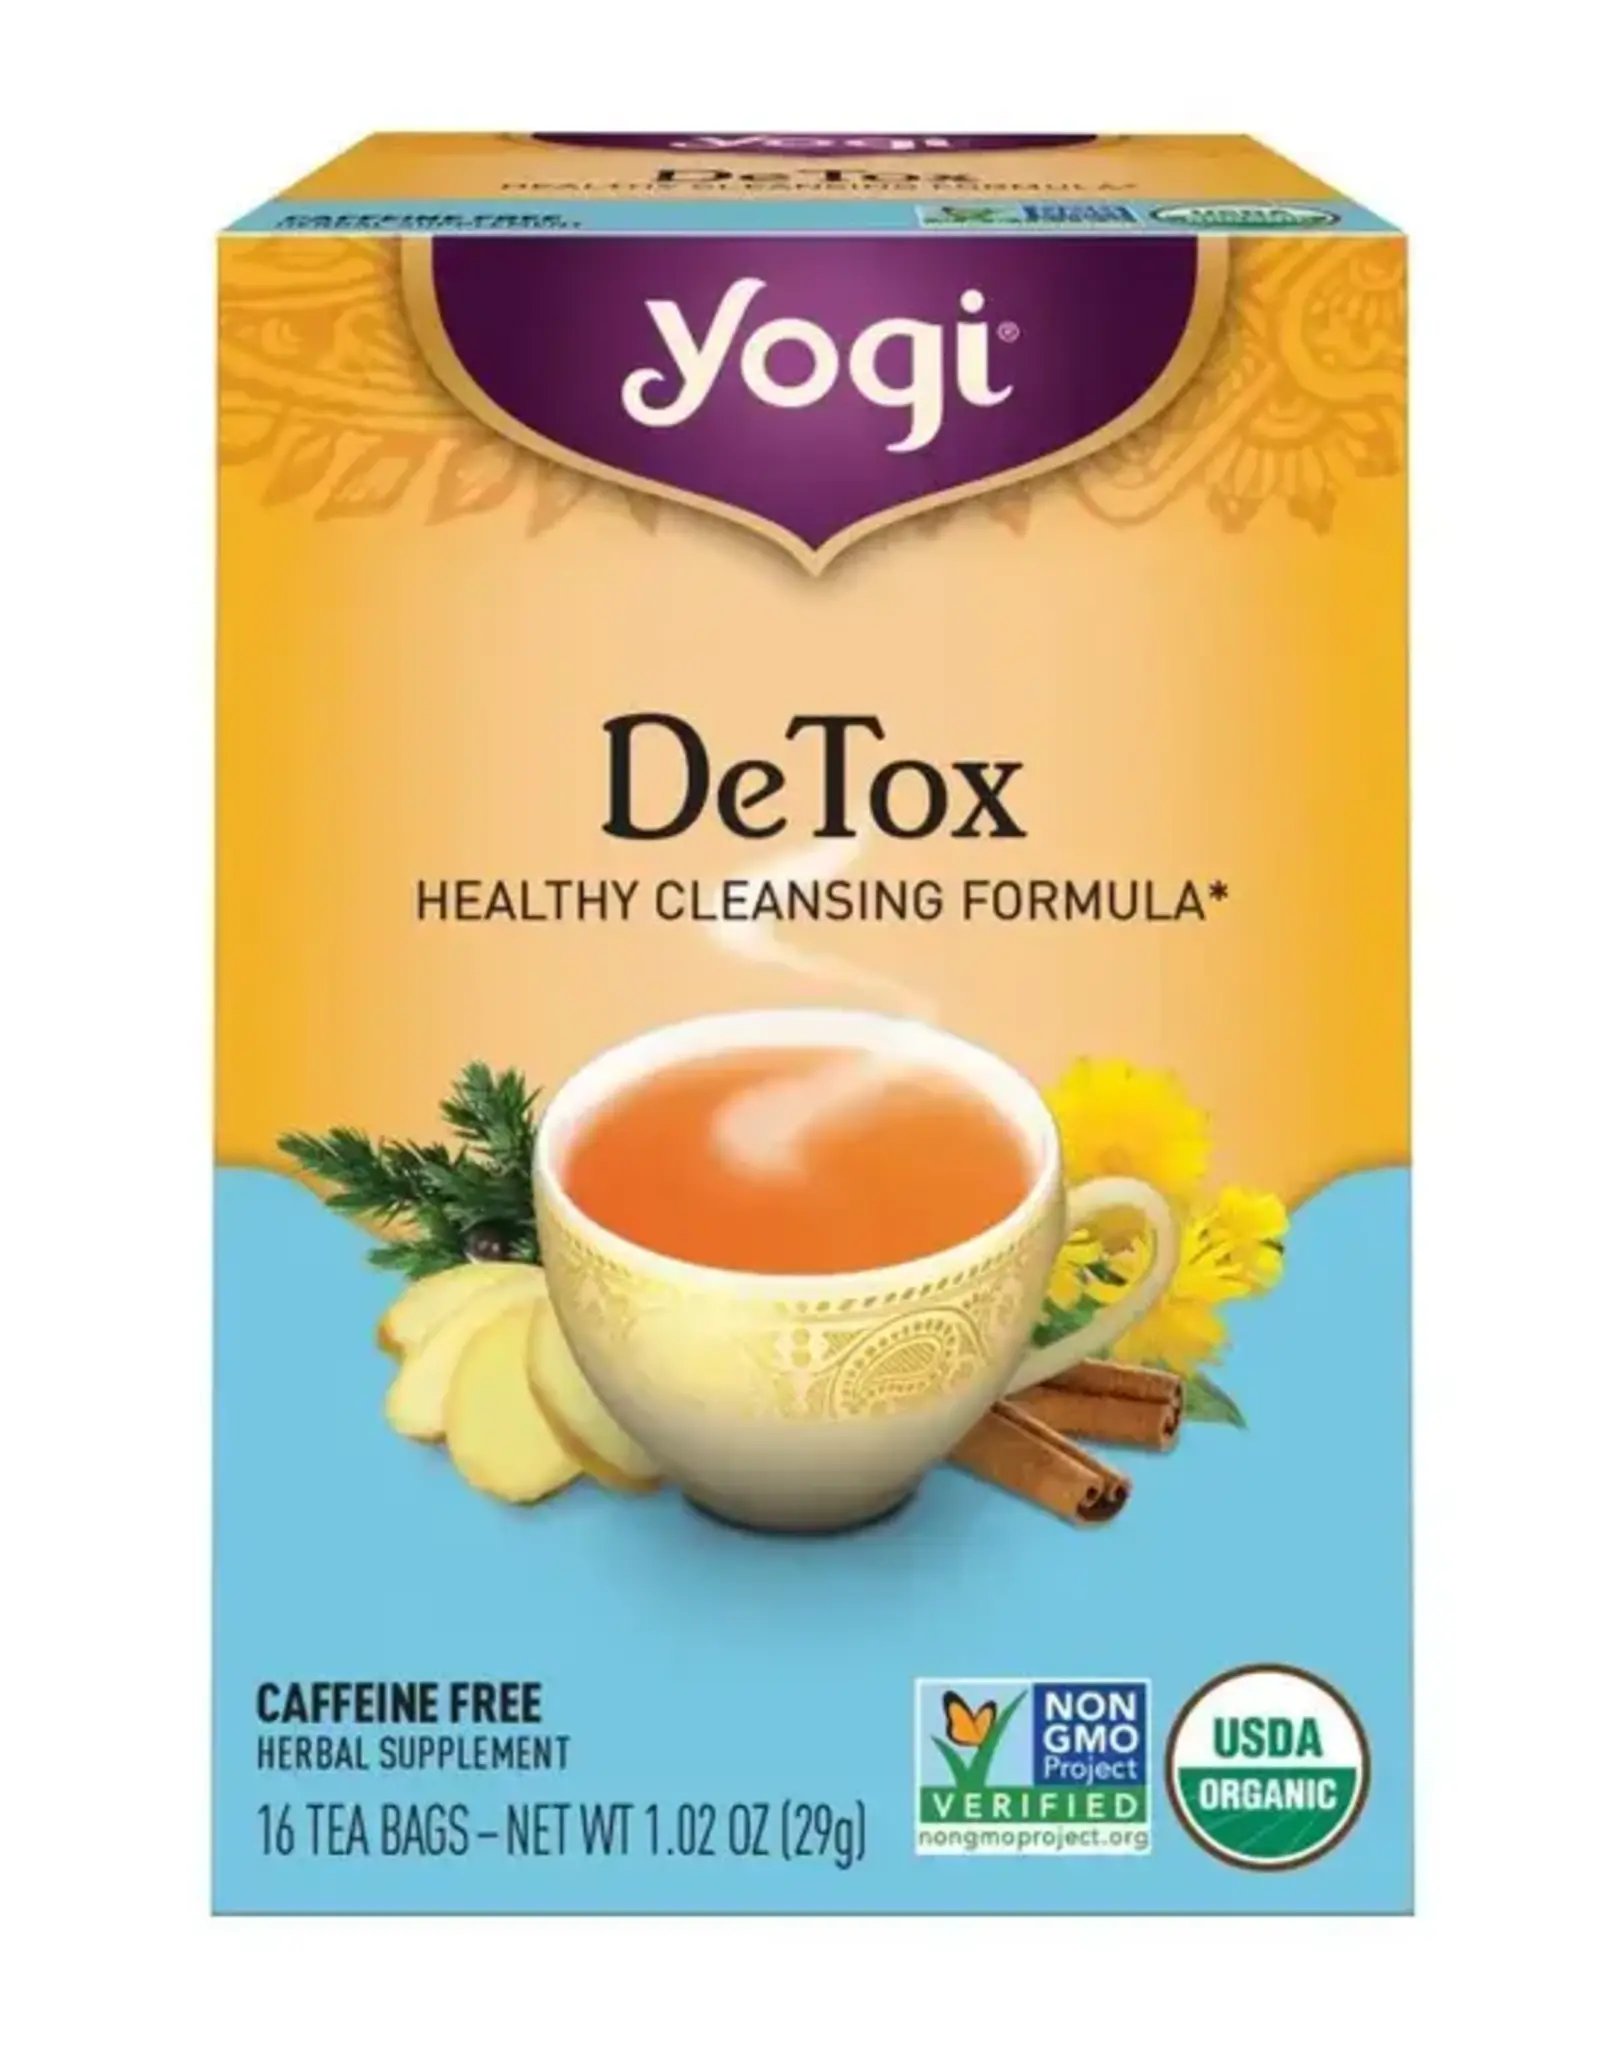 Yogi Detox Tea - Cleansing Formula